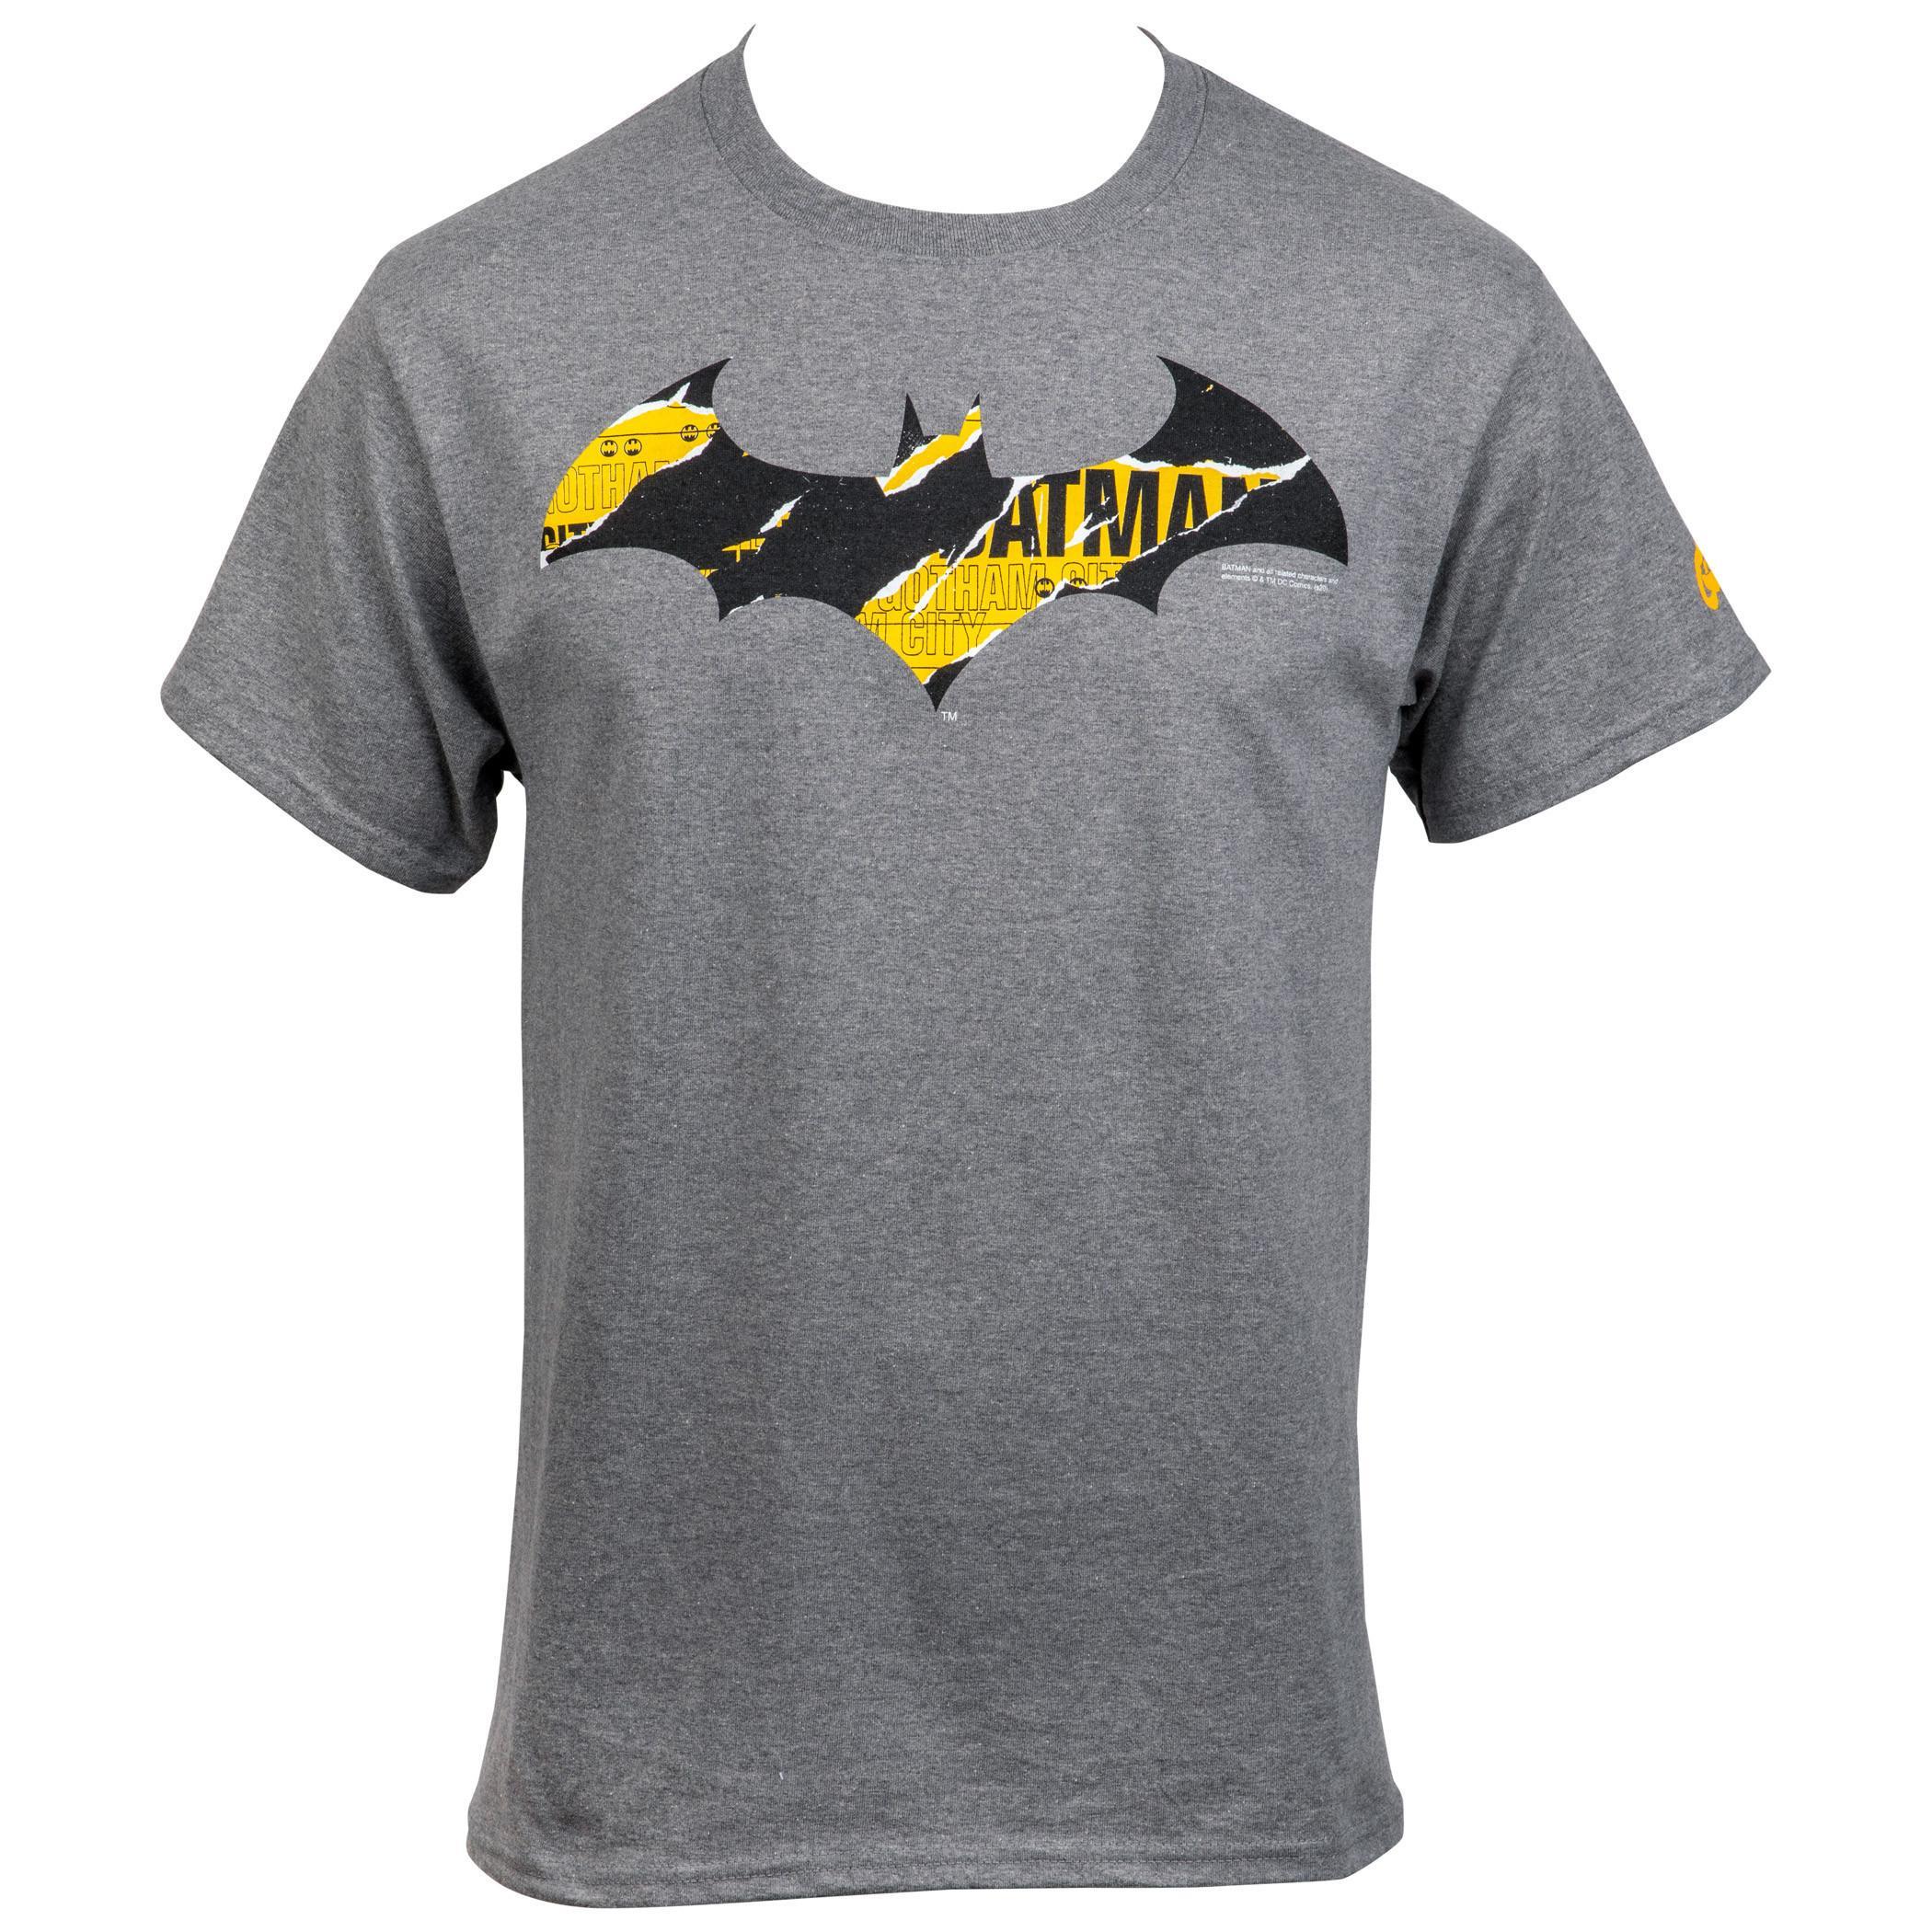 Batman At Work Distressed Symbol T-Shirt Large